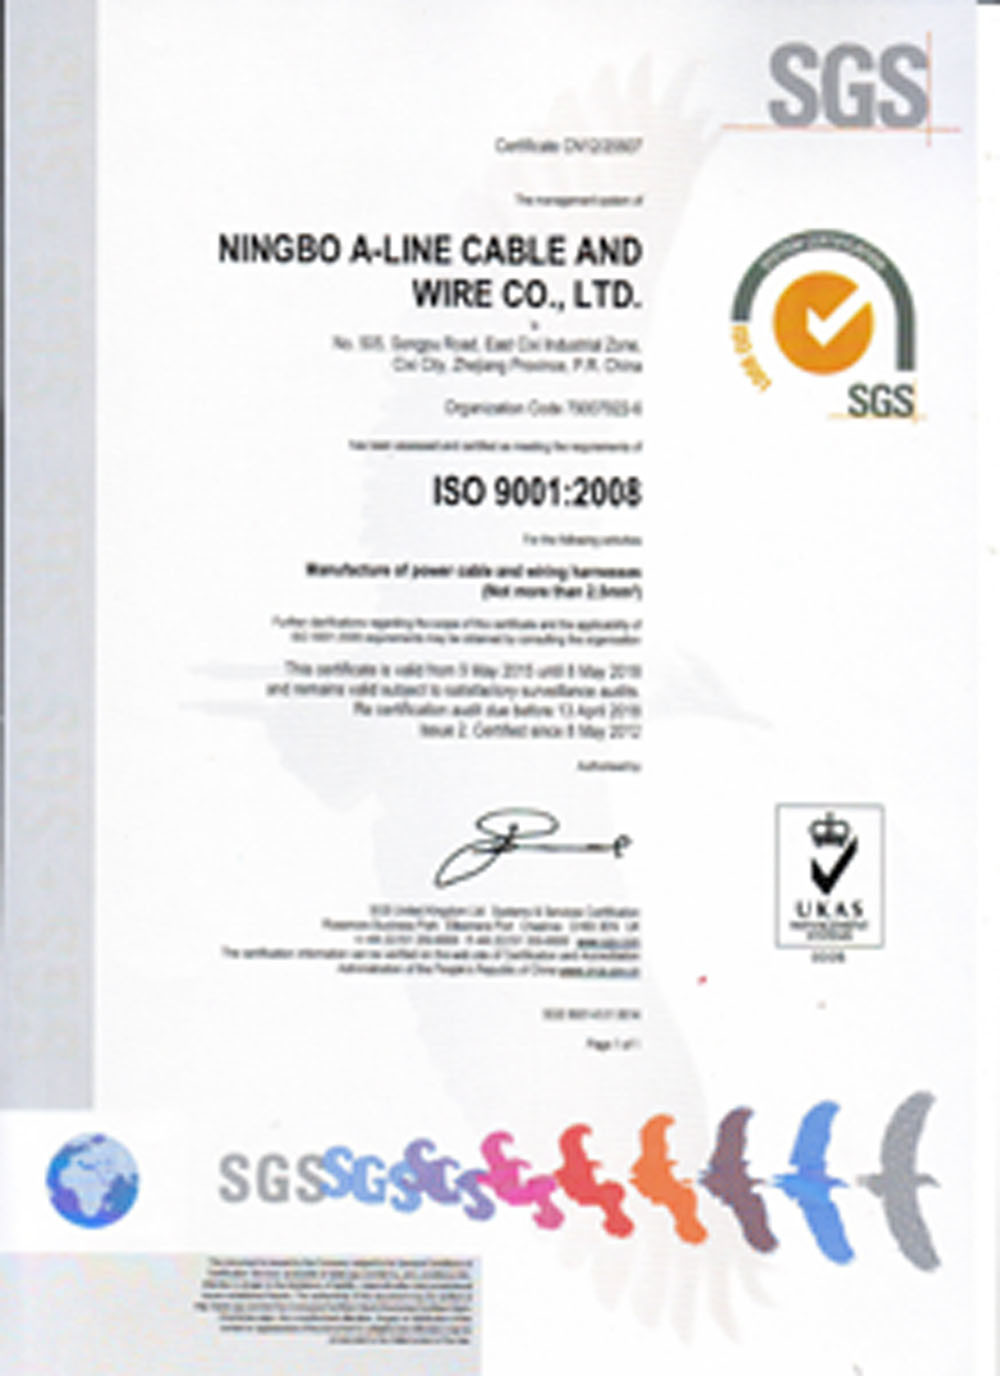 IEC320 C13 to C14 AC Power Cord